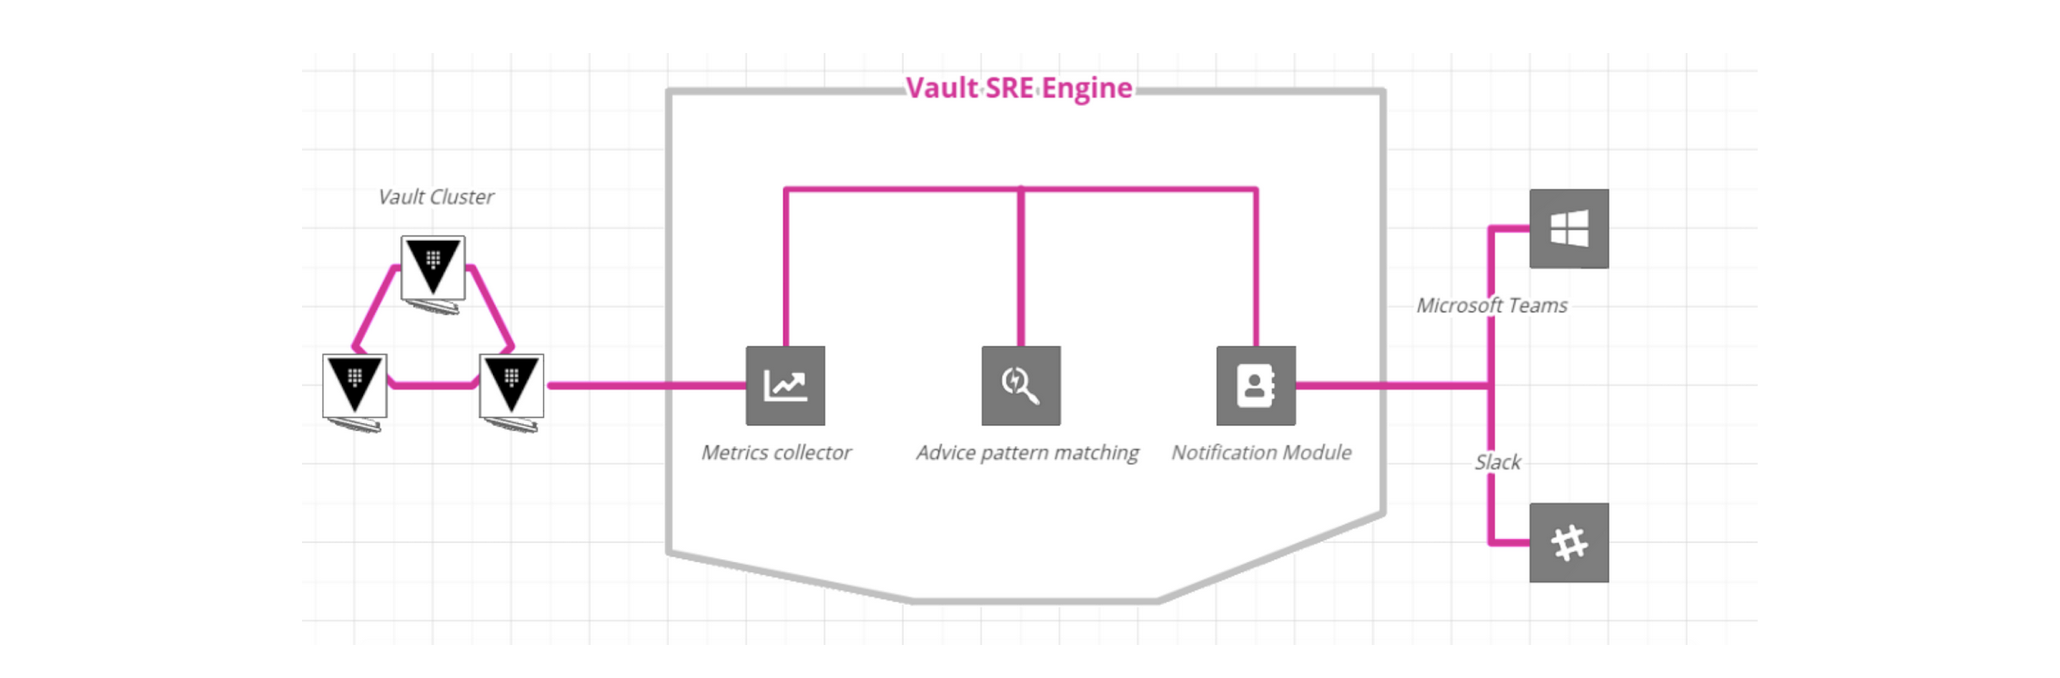 Vault SRE Engine Architecture